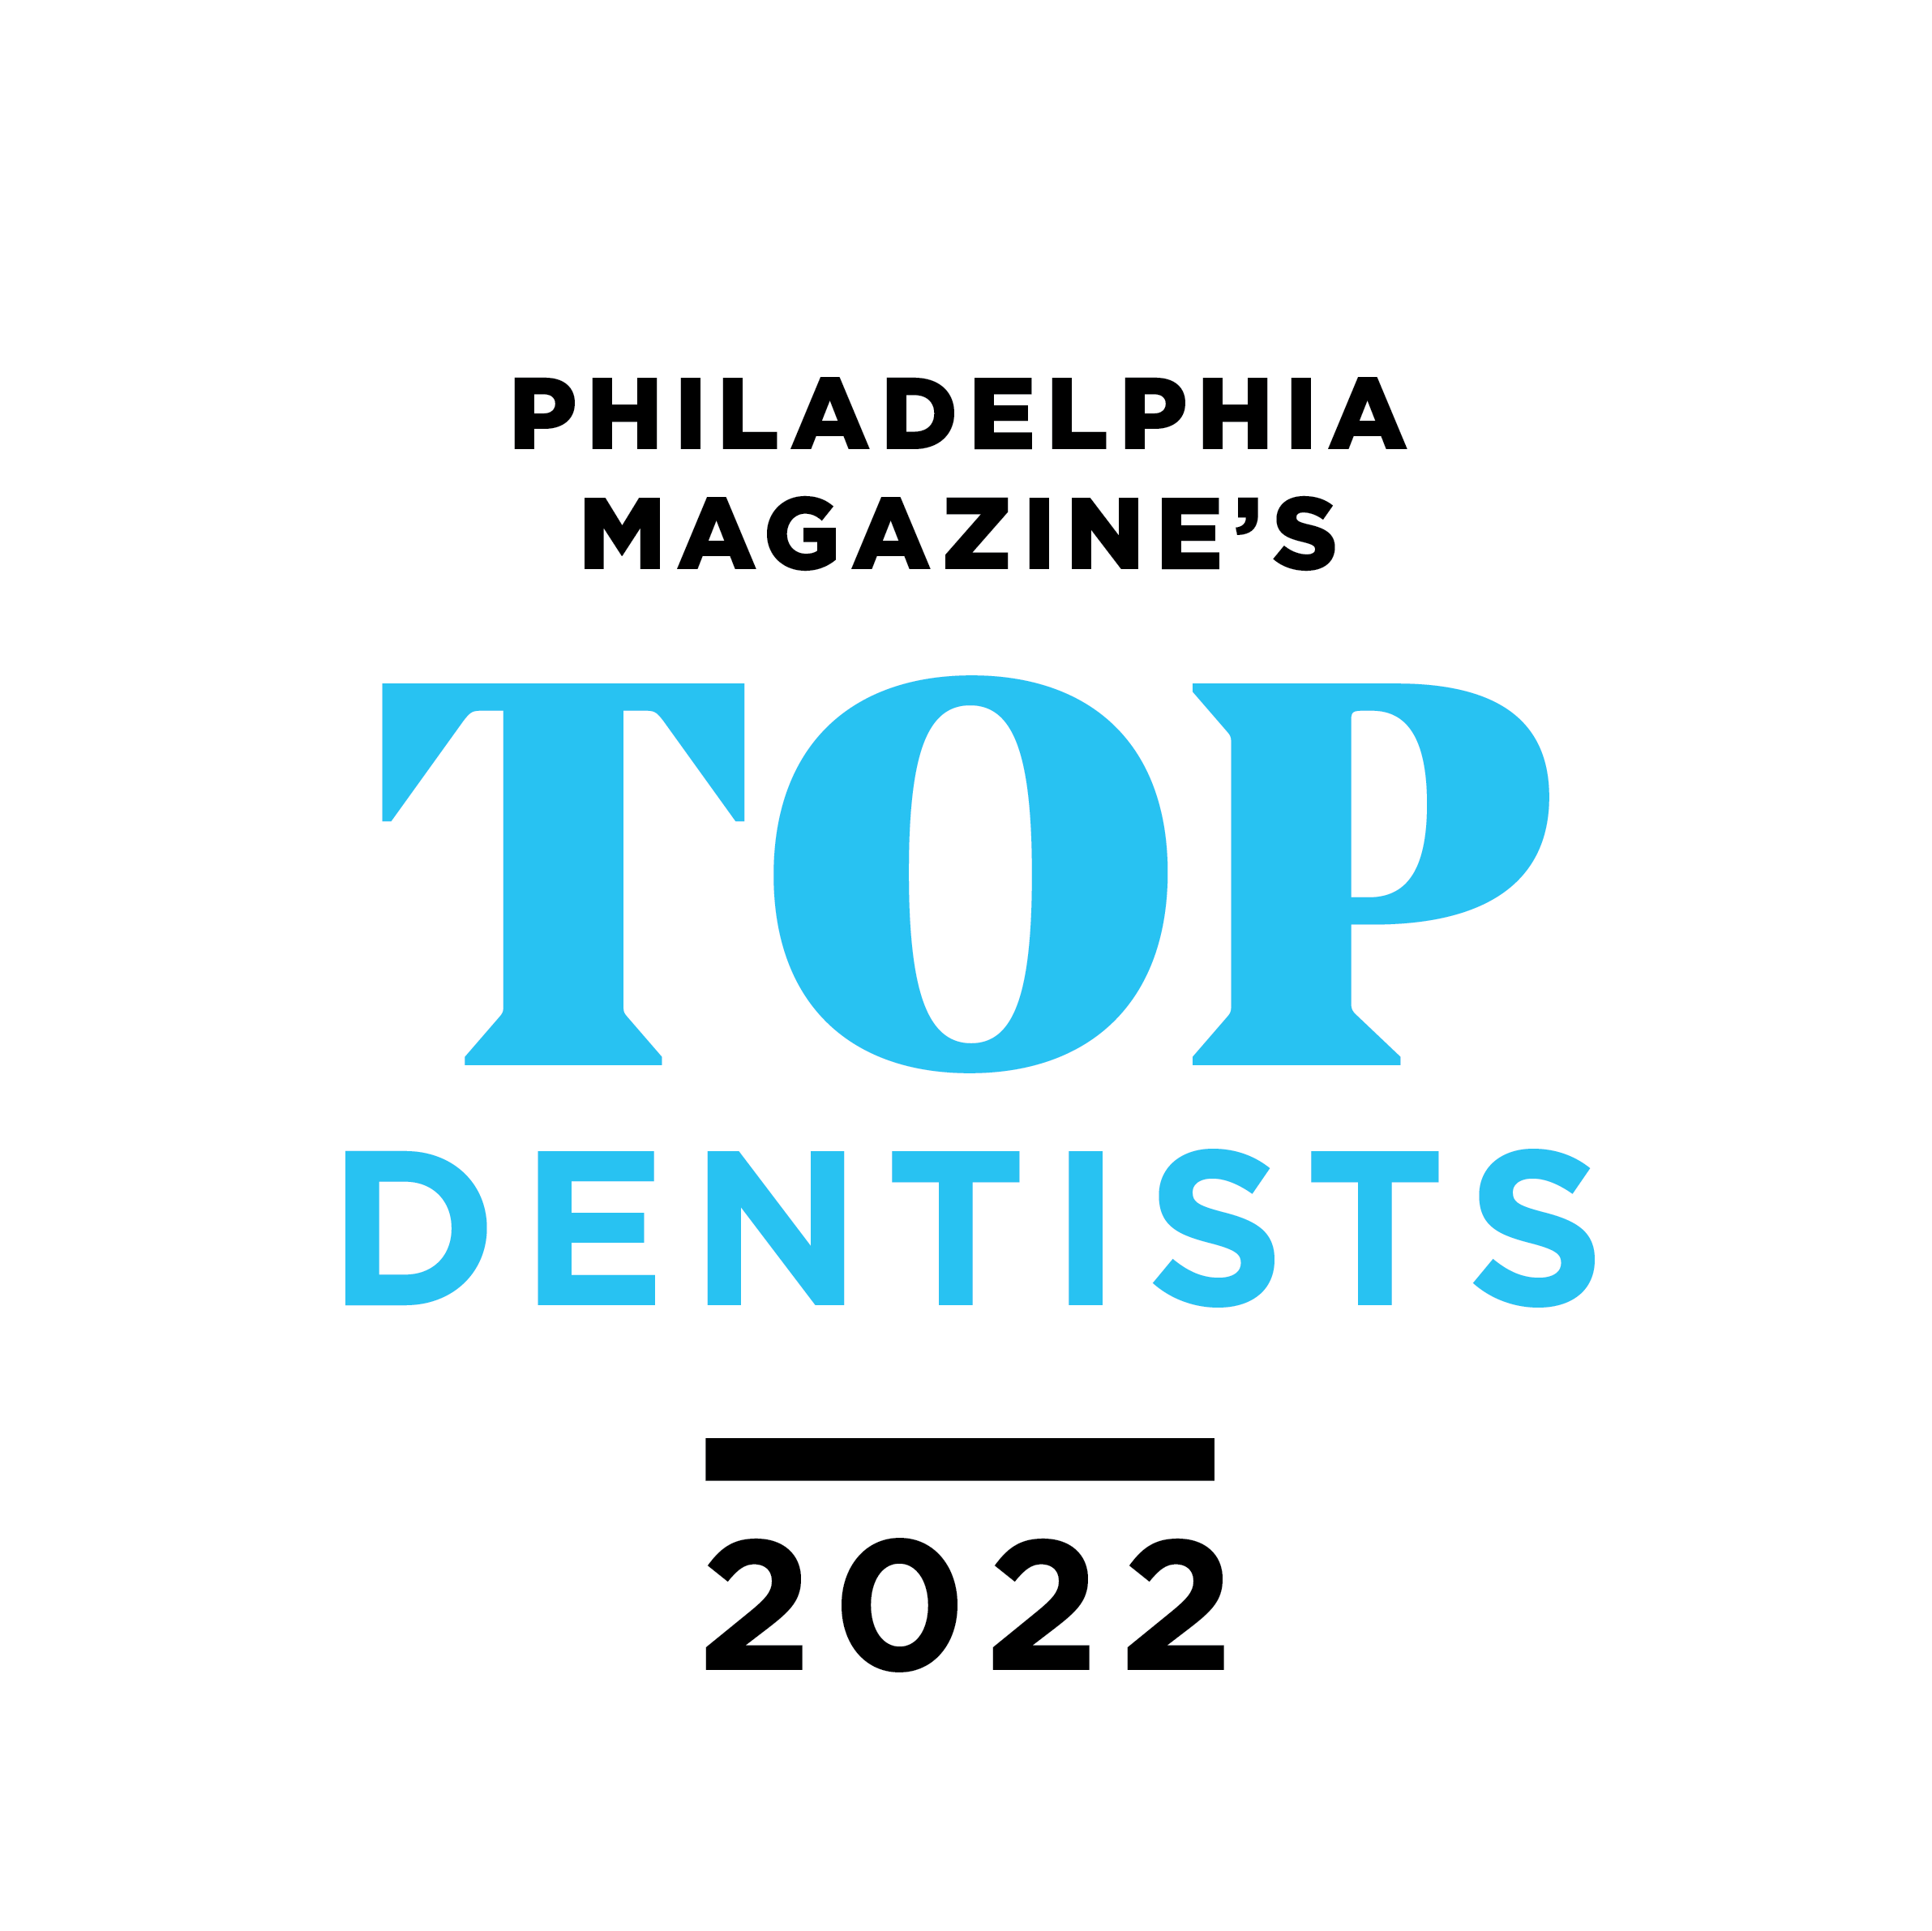 Top Dentists Winners 2022 Philadelphia Magazine